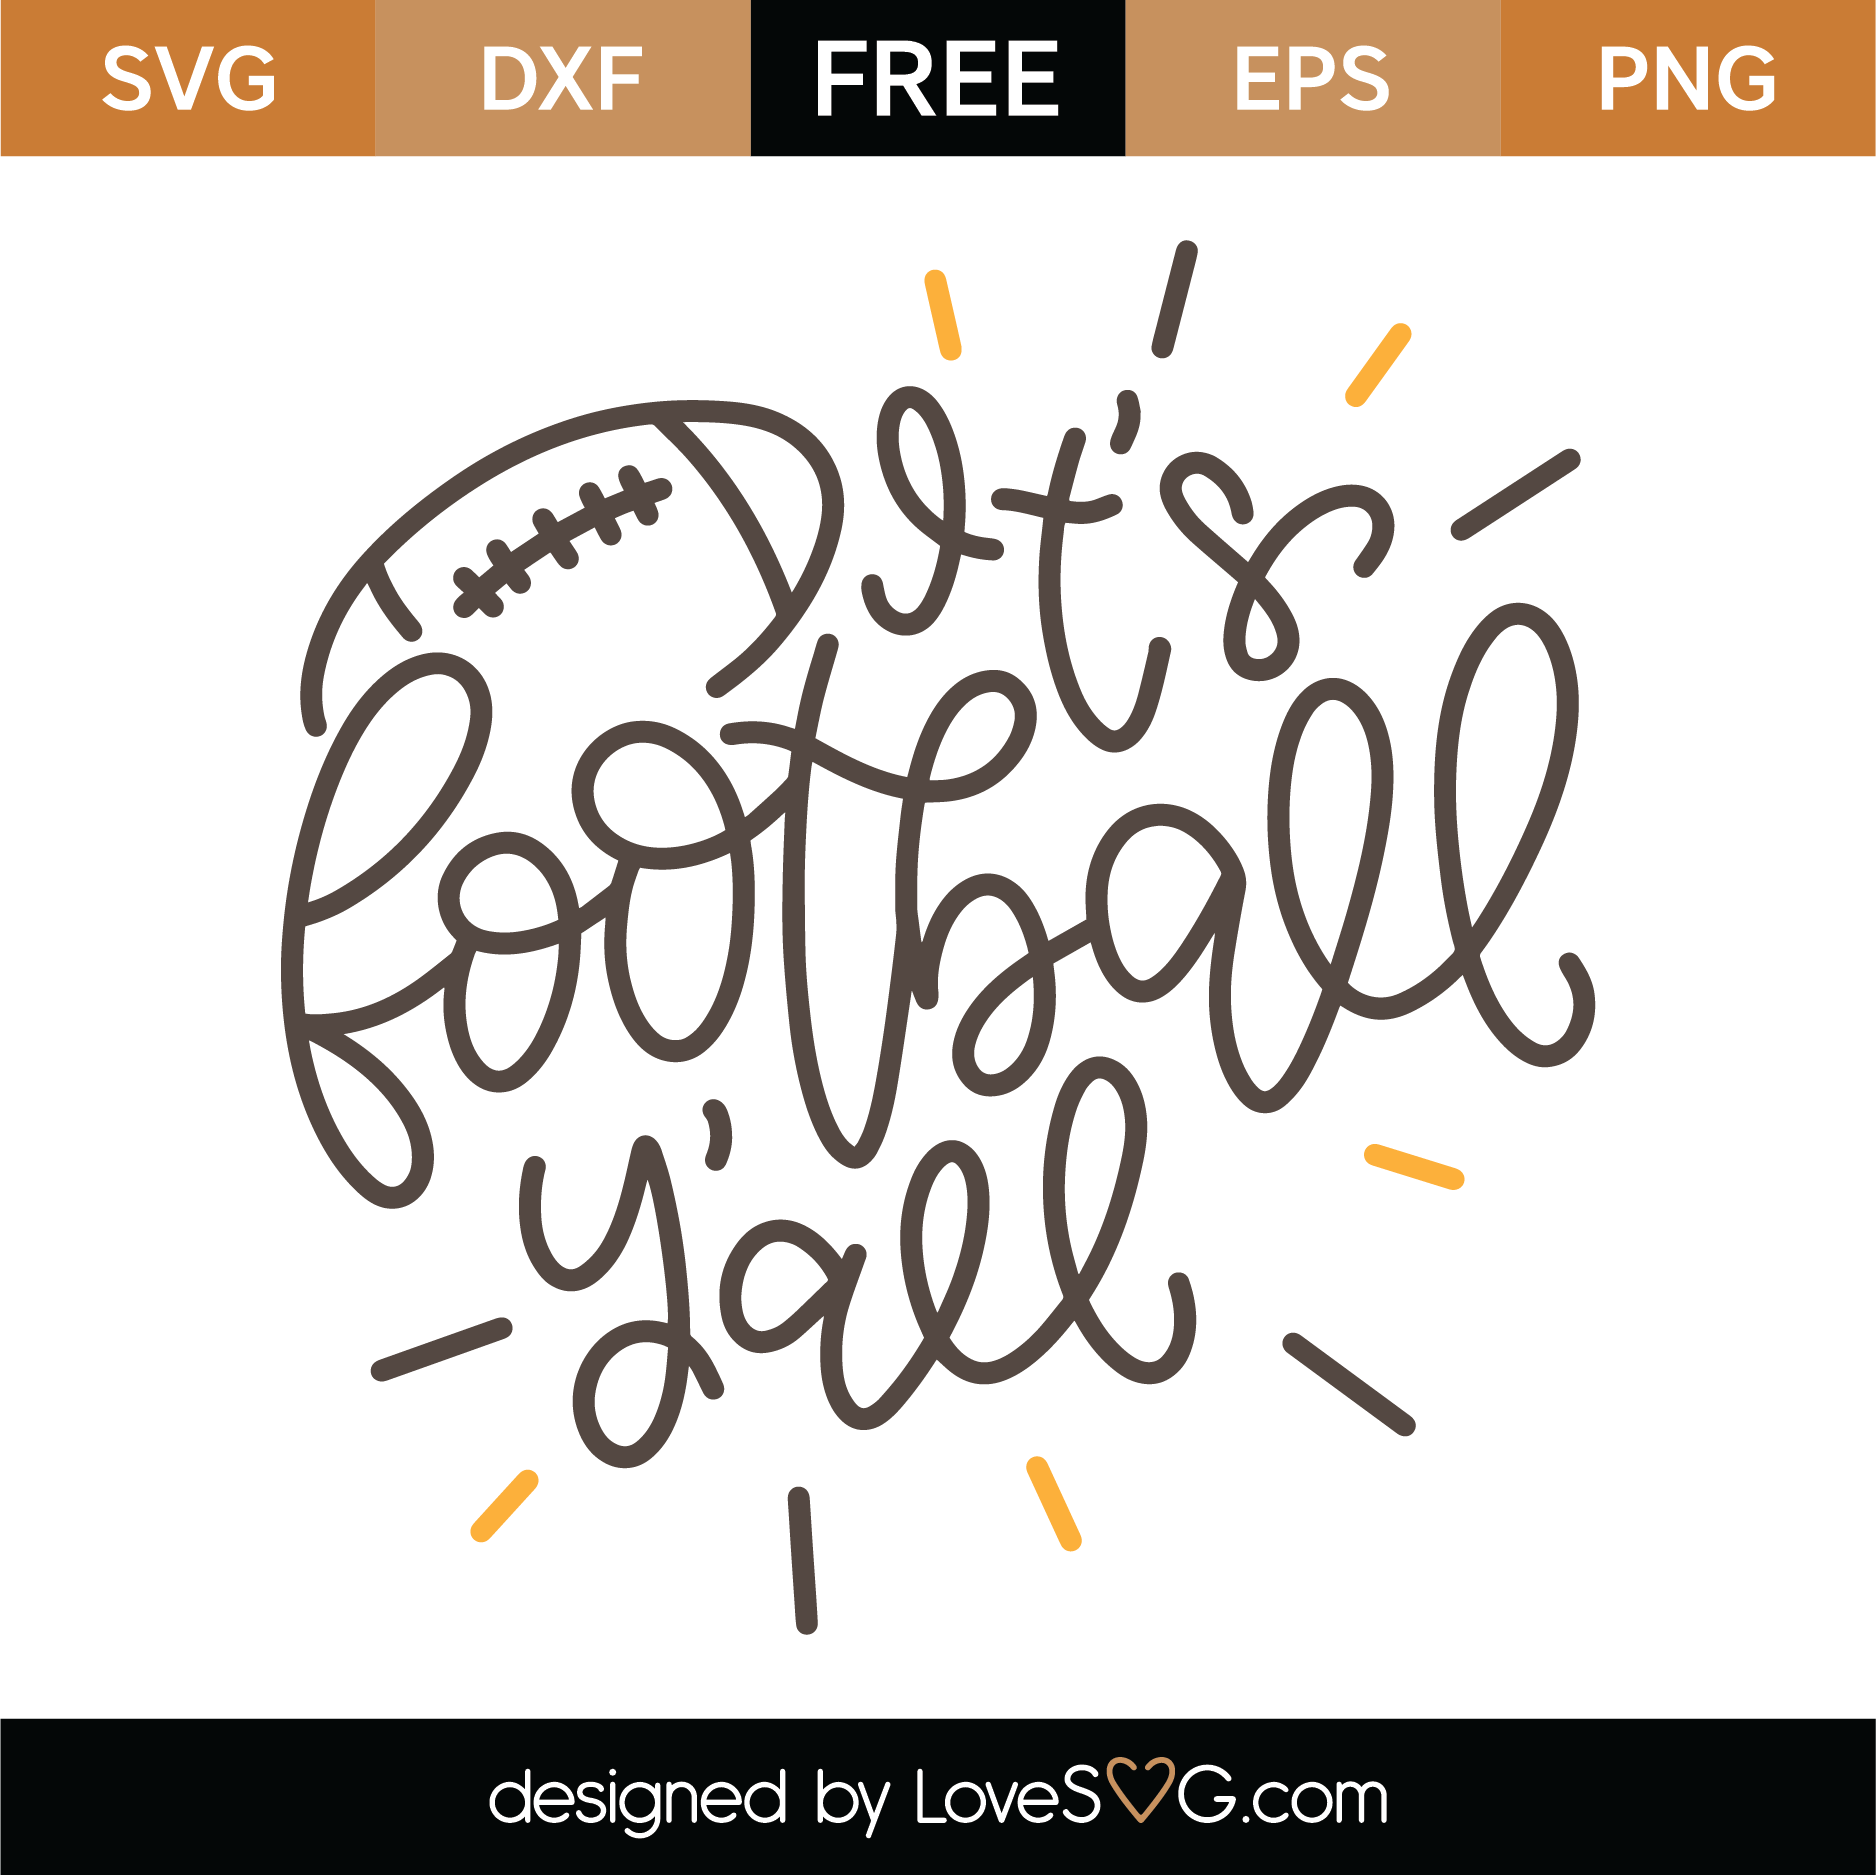 Download Free It's Football Y'all SVG Cut File | Lovesvg.com